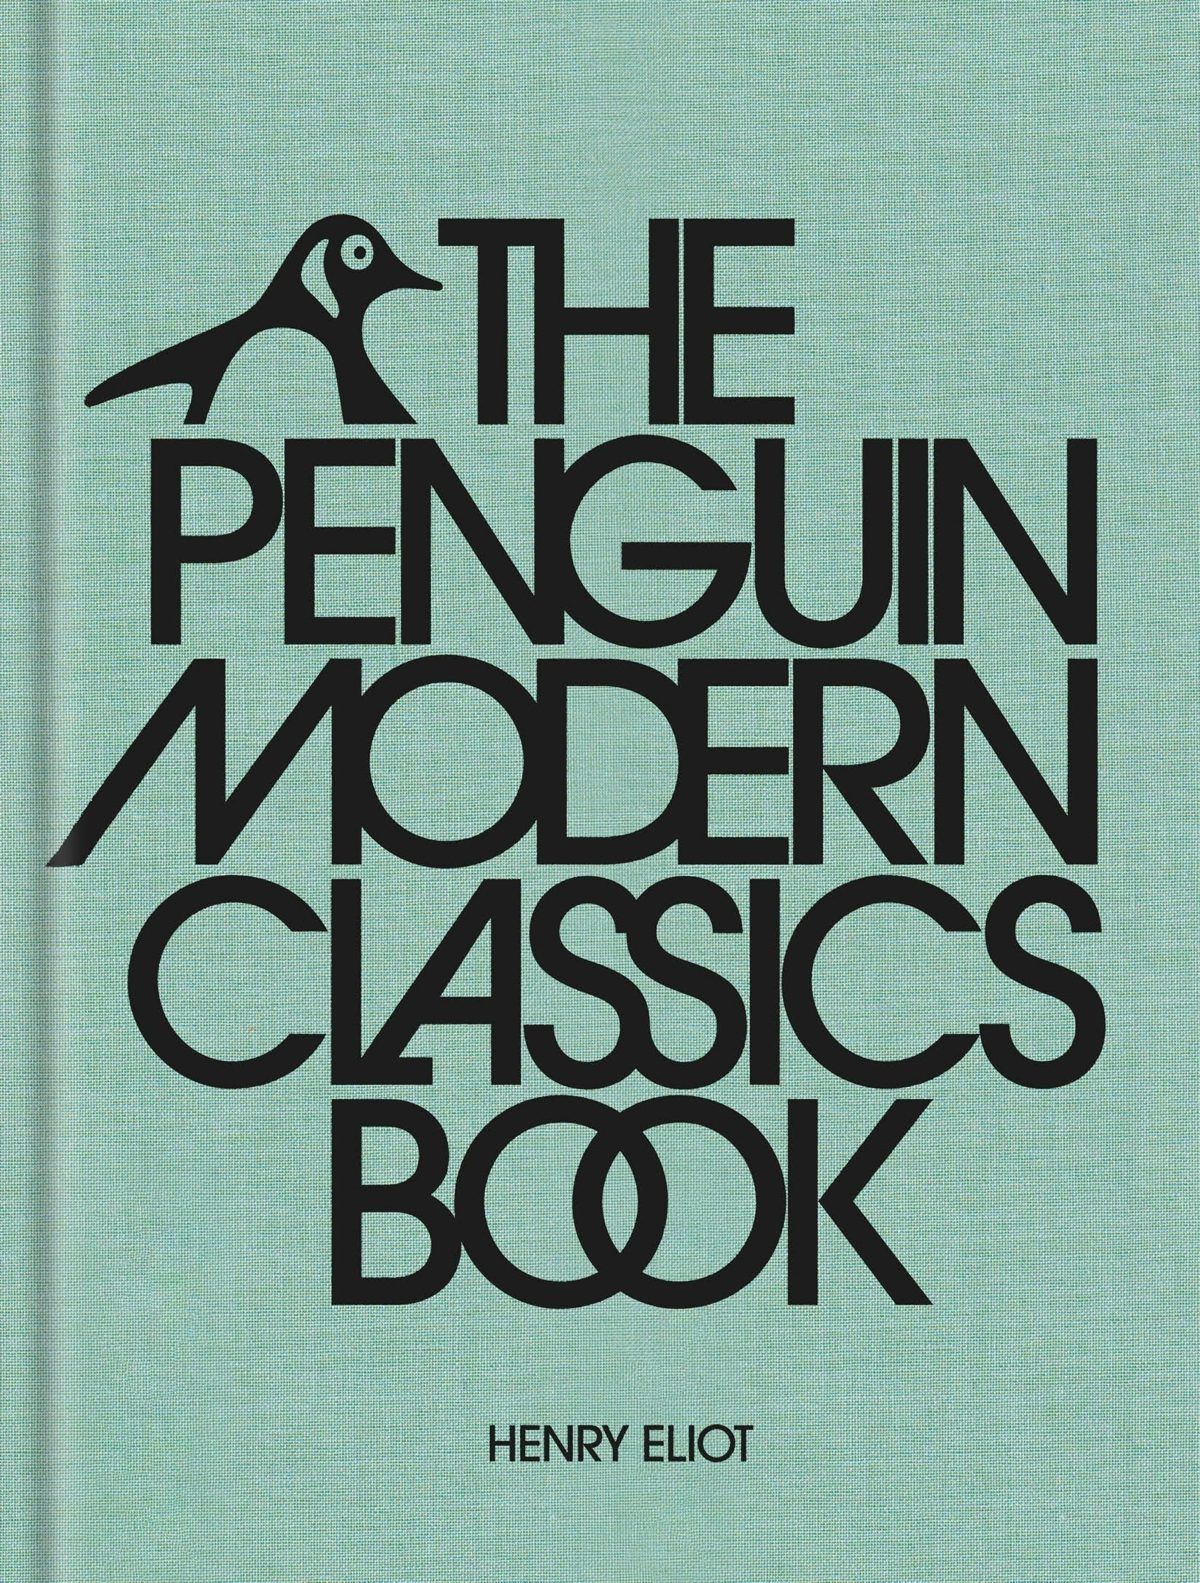 A classic design for the Classics – PENGUIN SERIES DESIGN